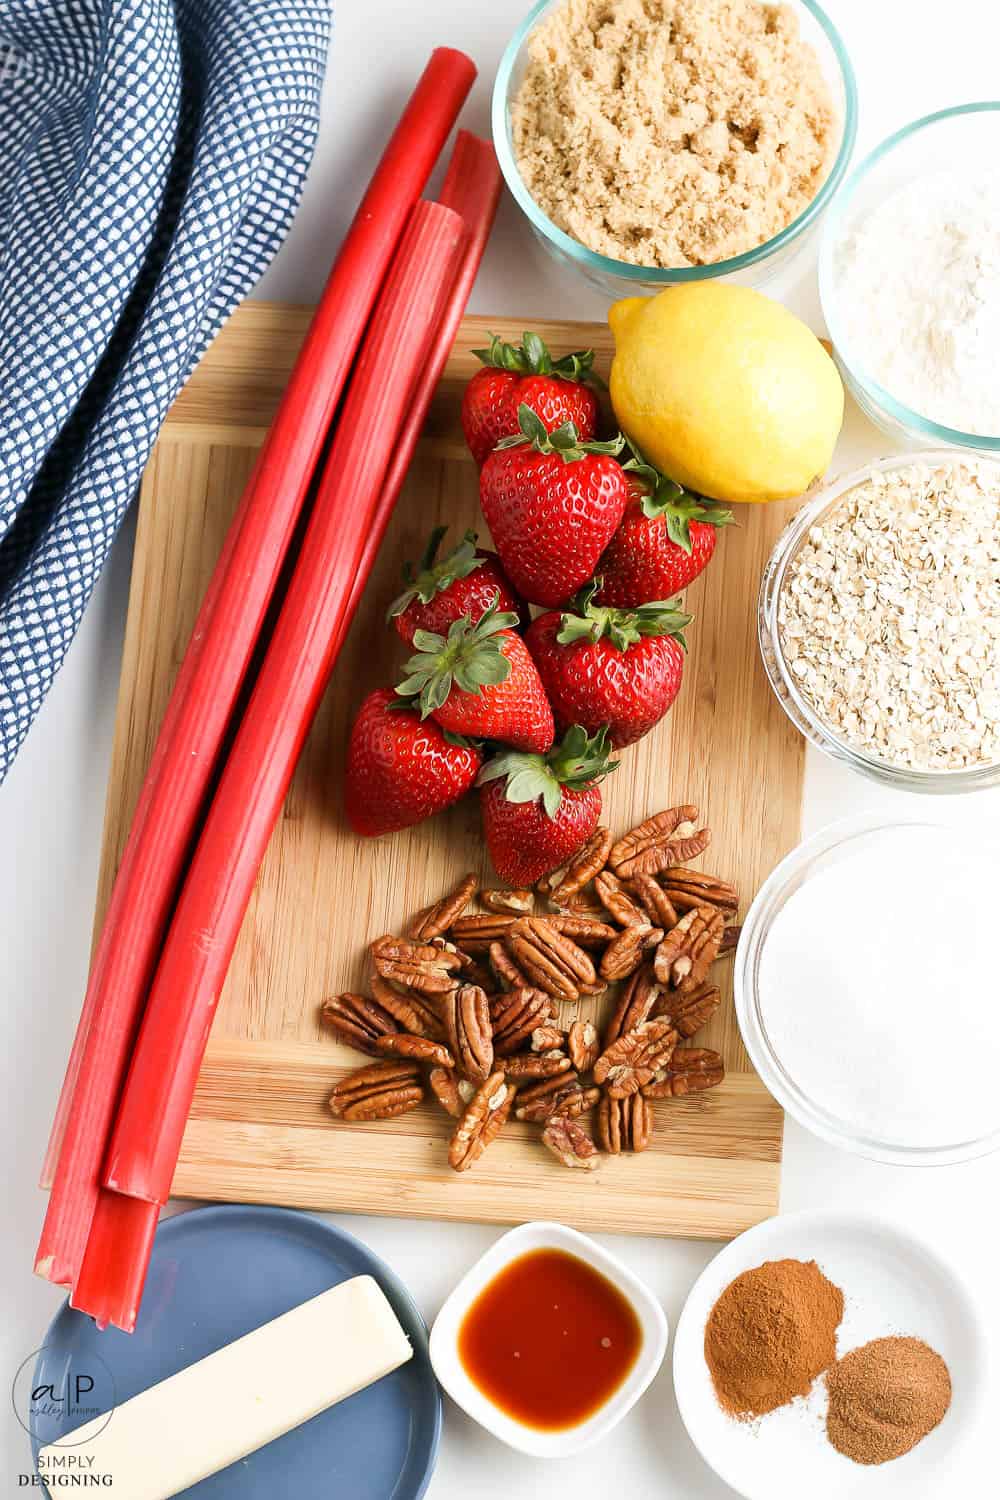 ingredients needed for rhubarb strawberry crisp